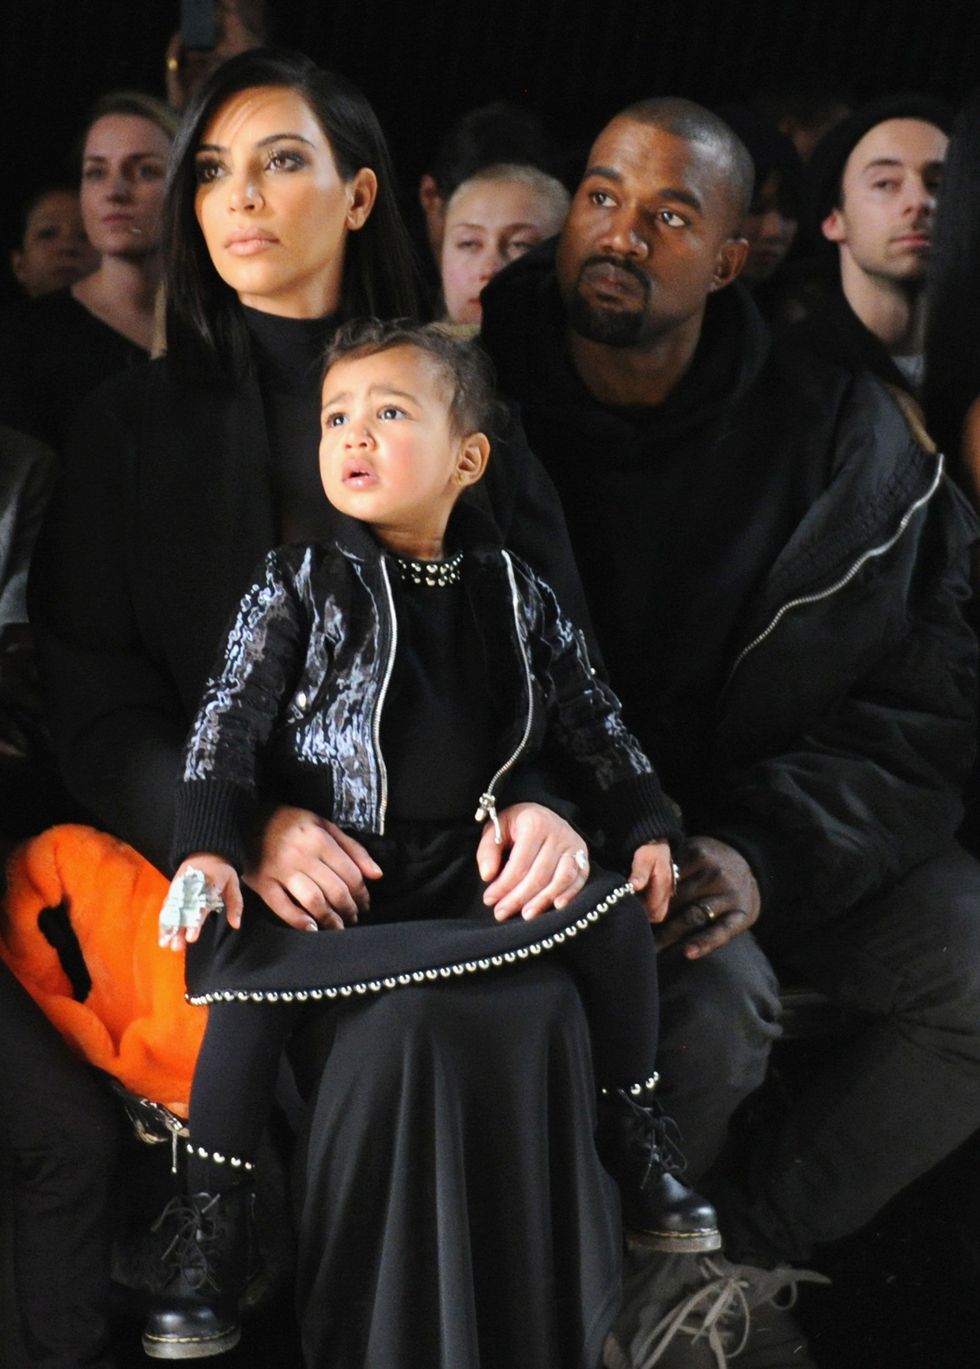 <p>Kardasian家族也是時尚愛好者，Kim Kardashian和老公Kanye West<span class="redactor-invisible-space">、寶貝女兒North West一起觀賞Alexander Wang大秀，看得目不轉睛！</span></p>